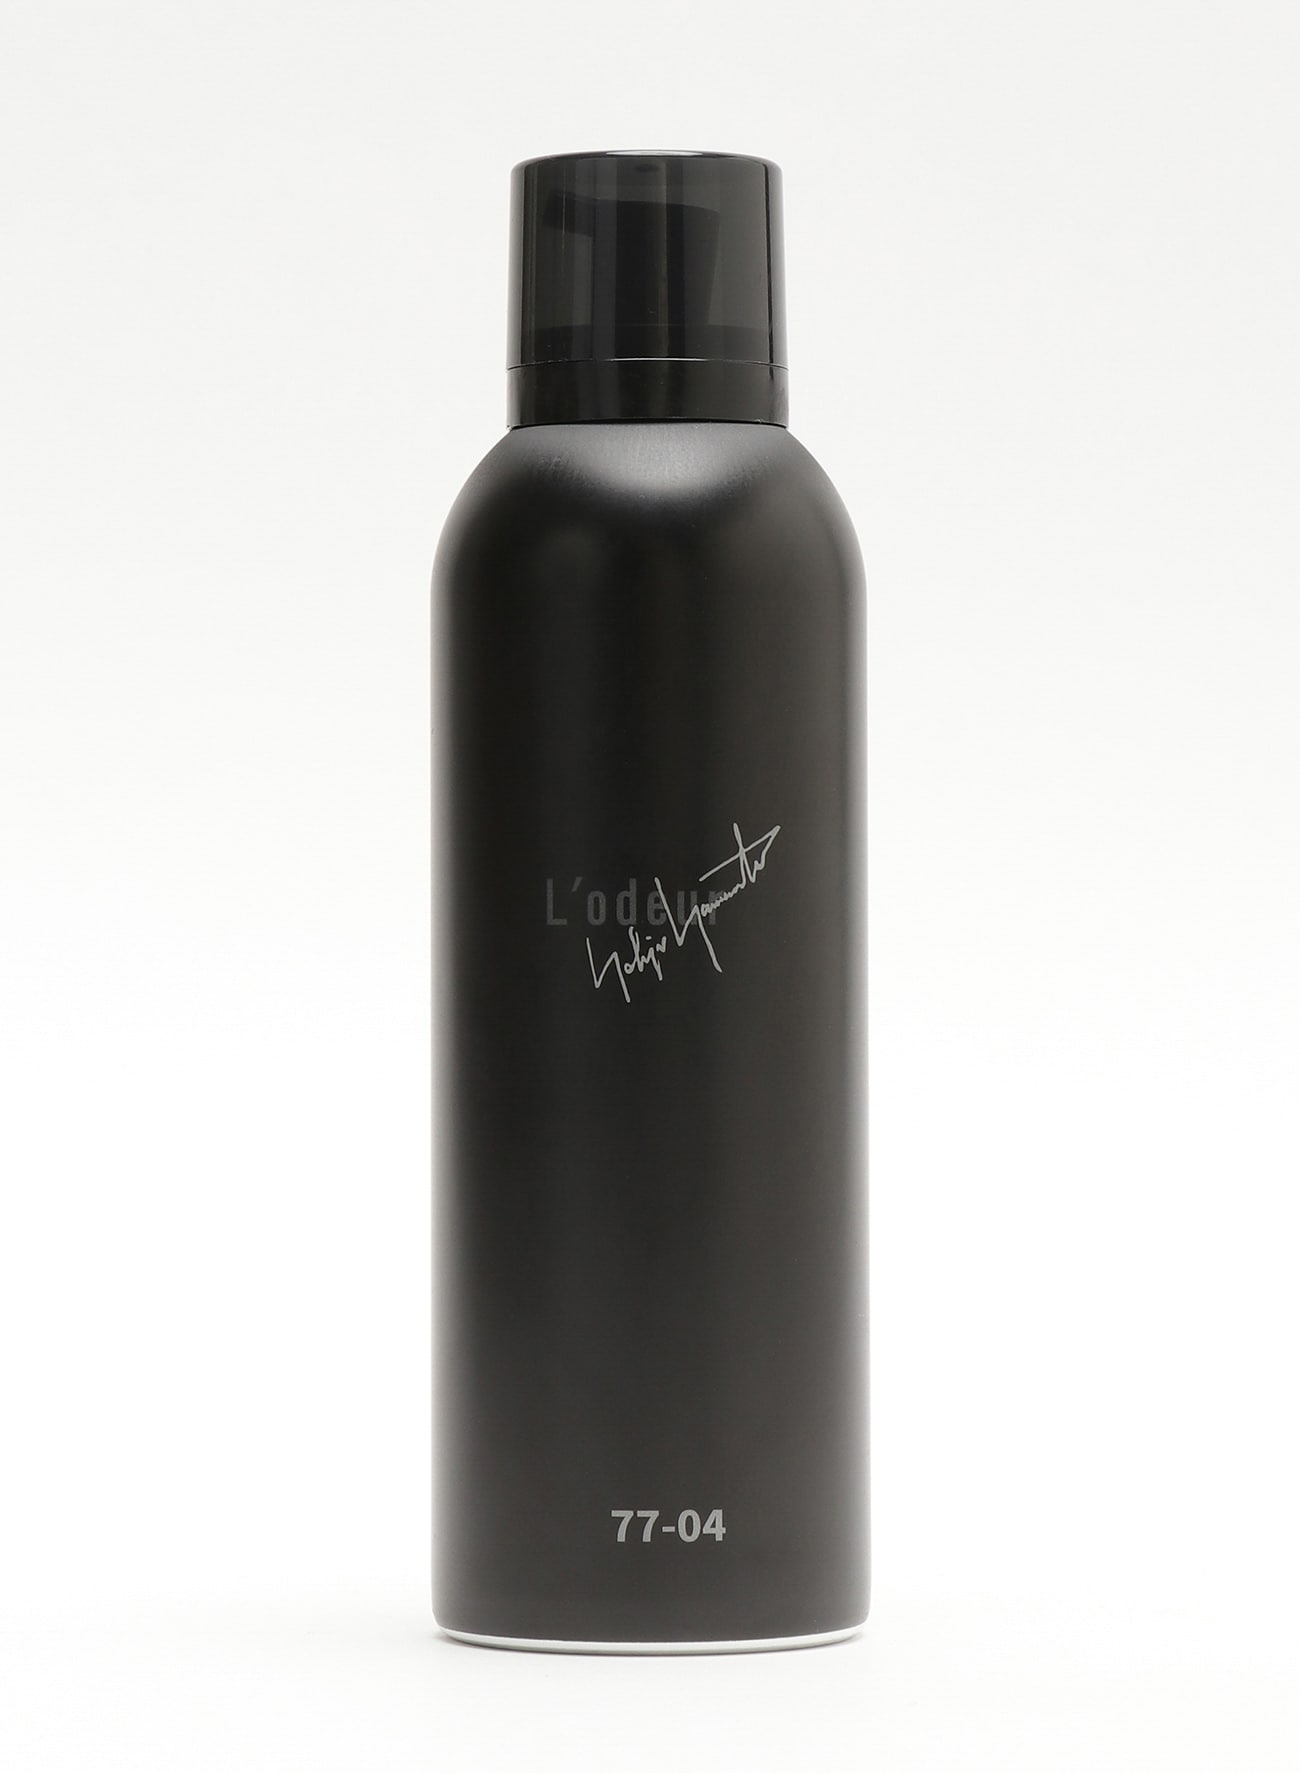 Linen spray 77-05×Sparkling shampoo 77-04